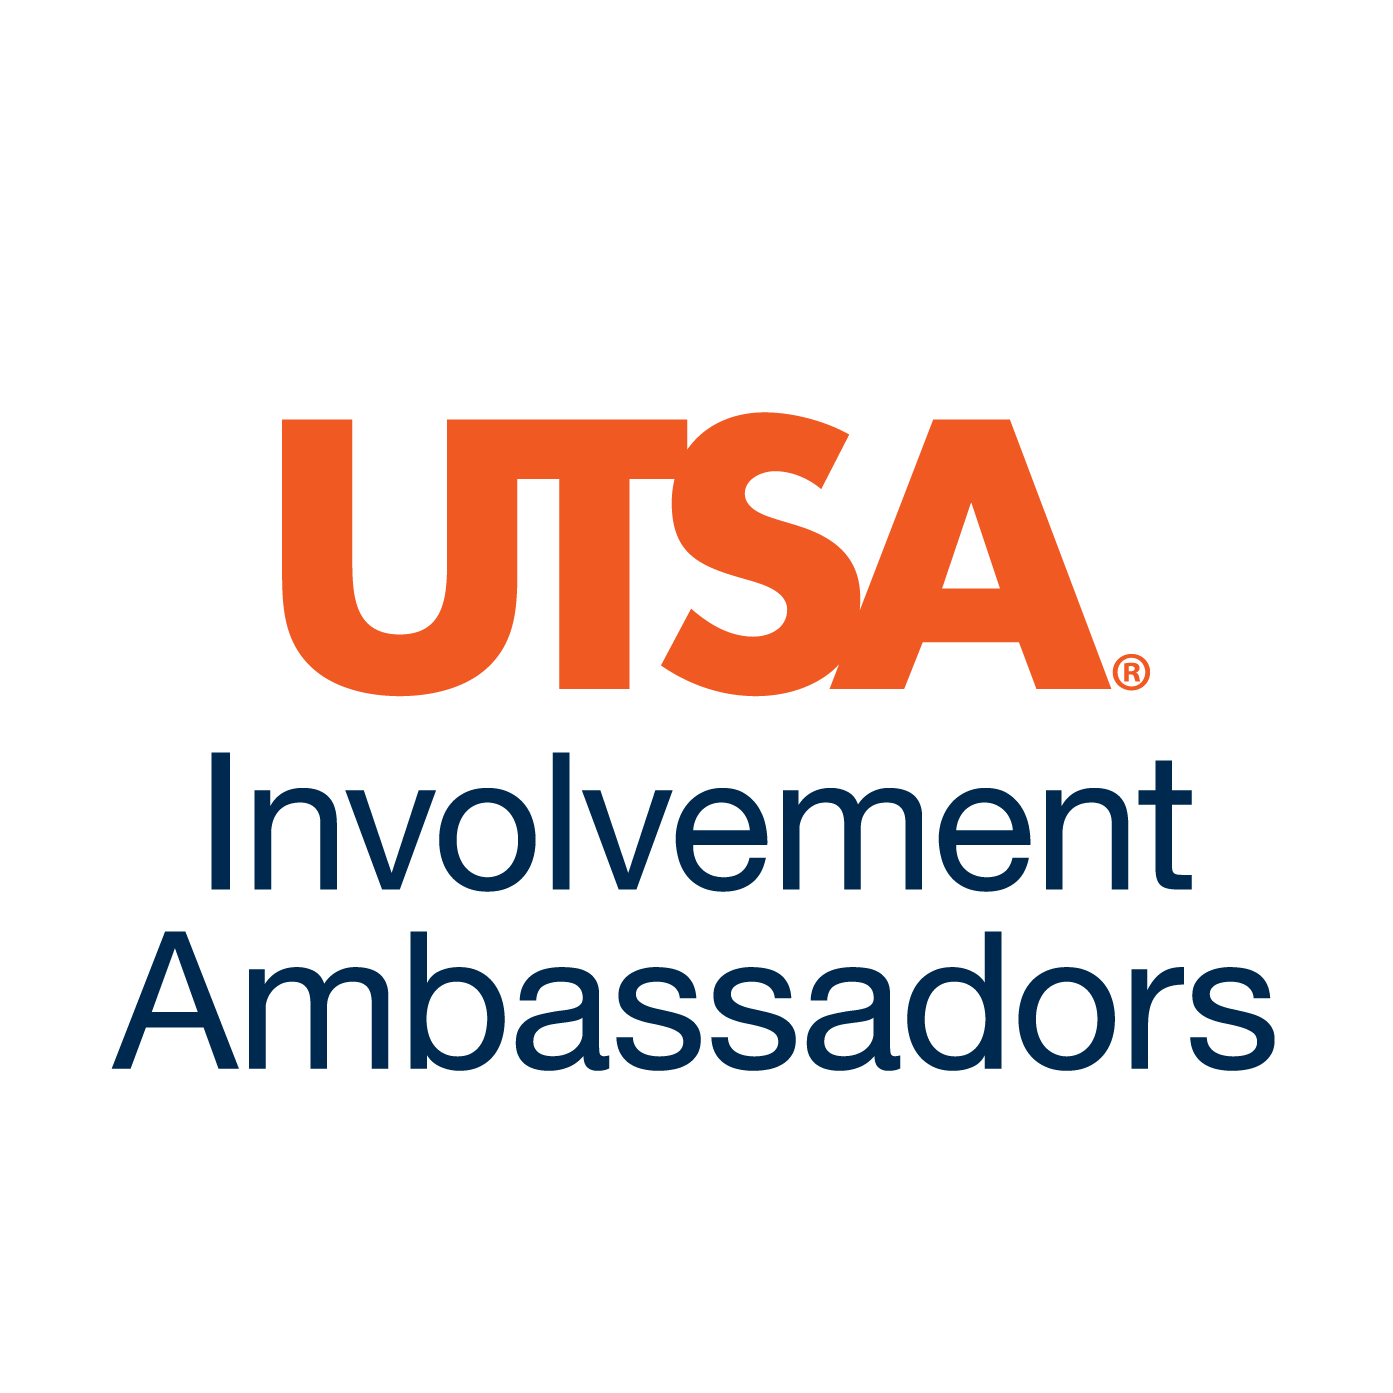 Involvement Ambassadors